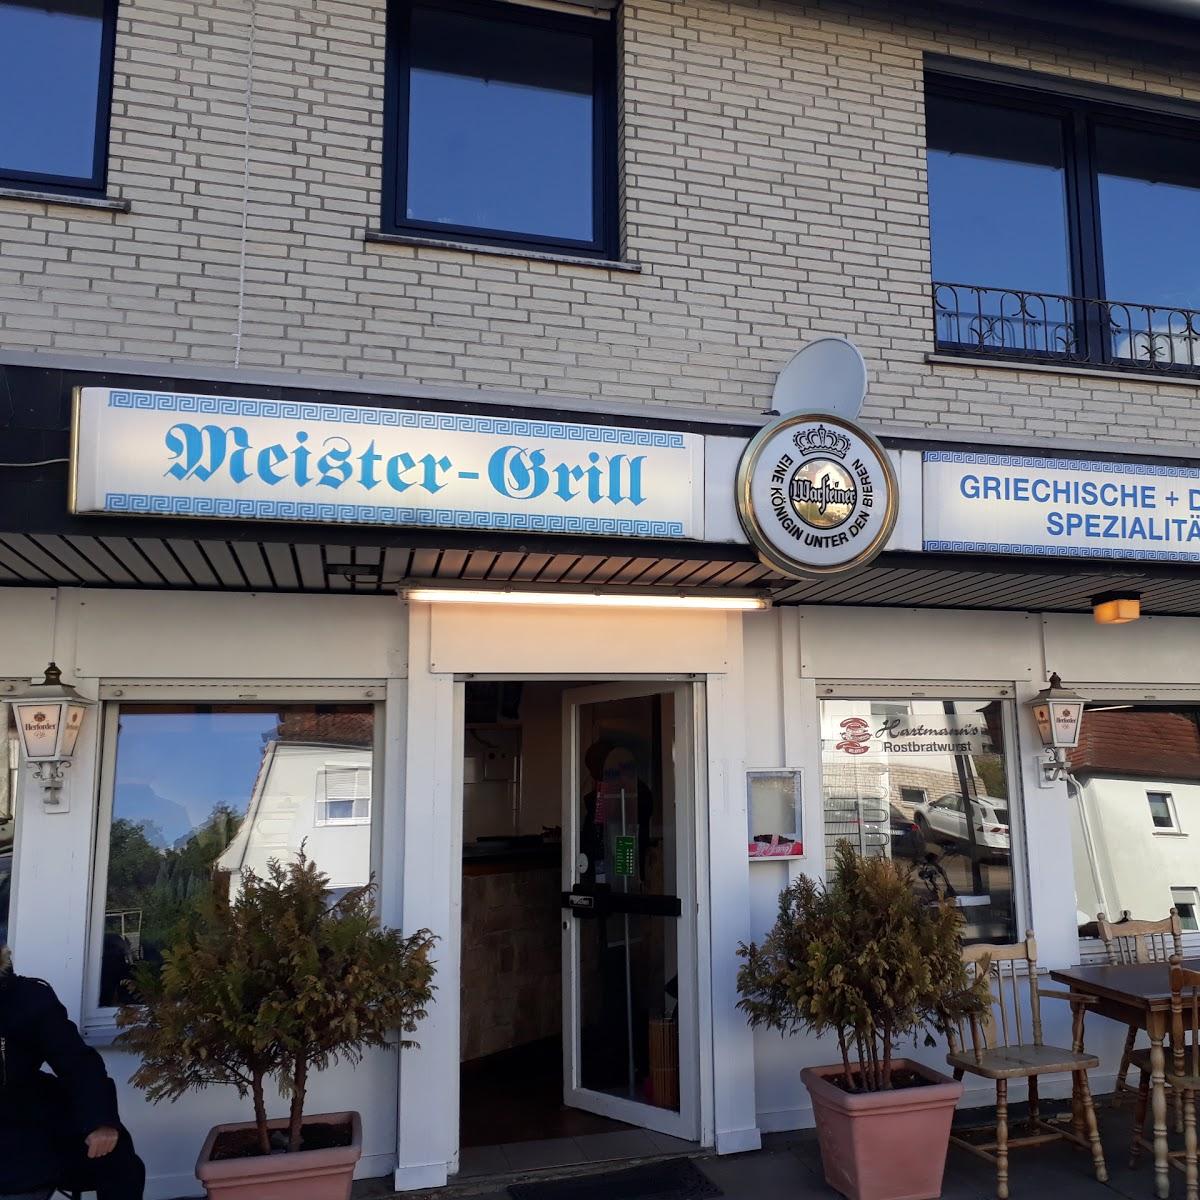 Restaurant "Meister Grill" in Bielefeld